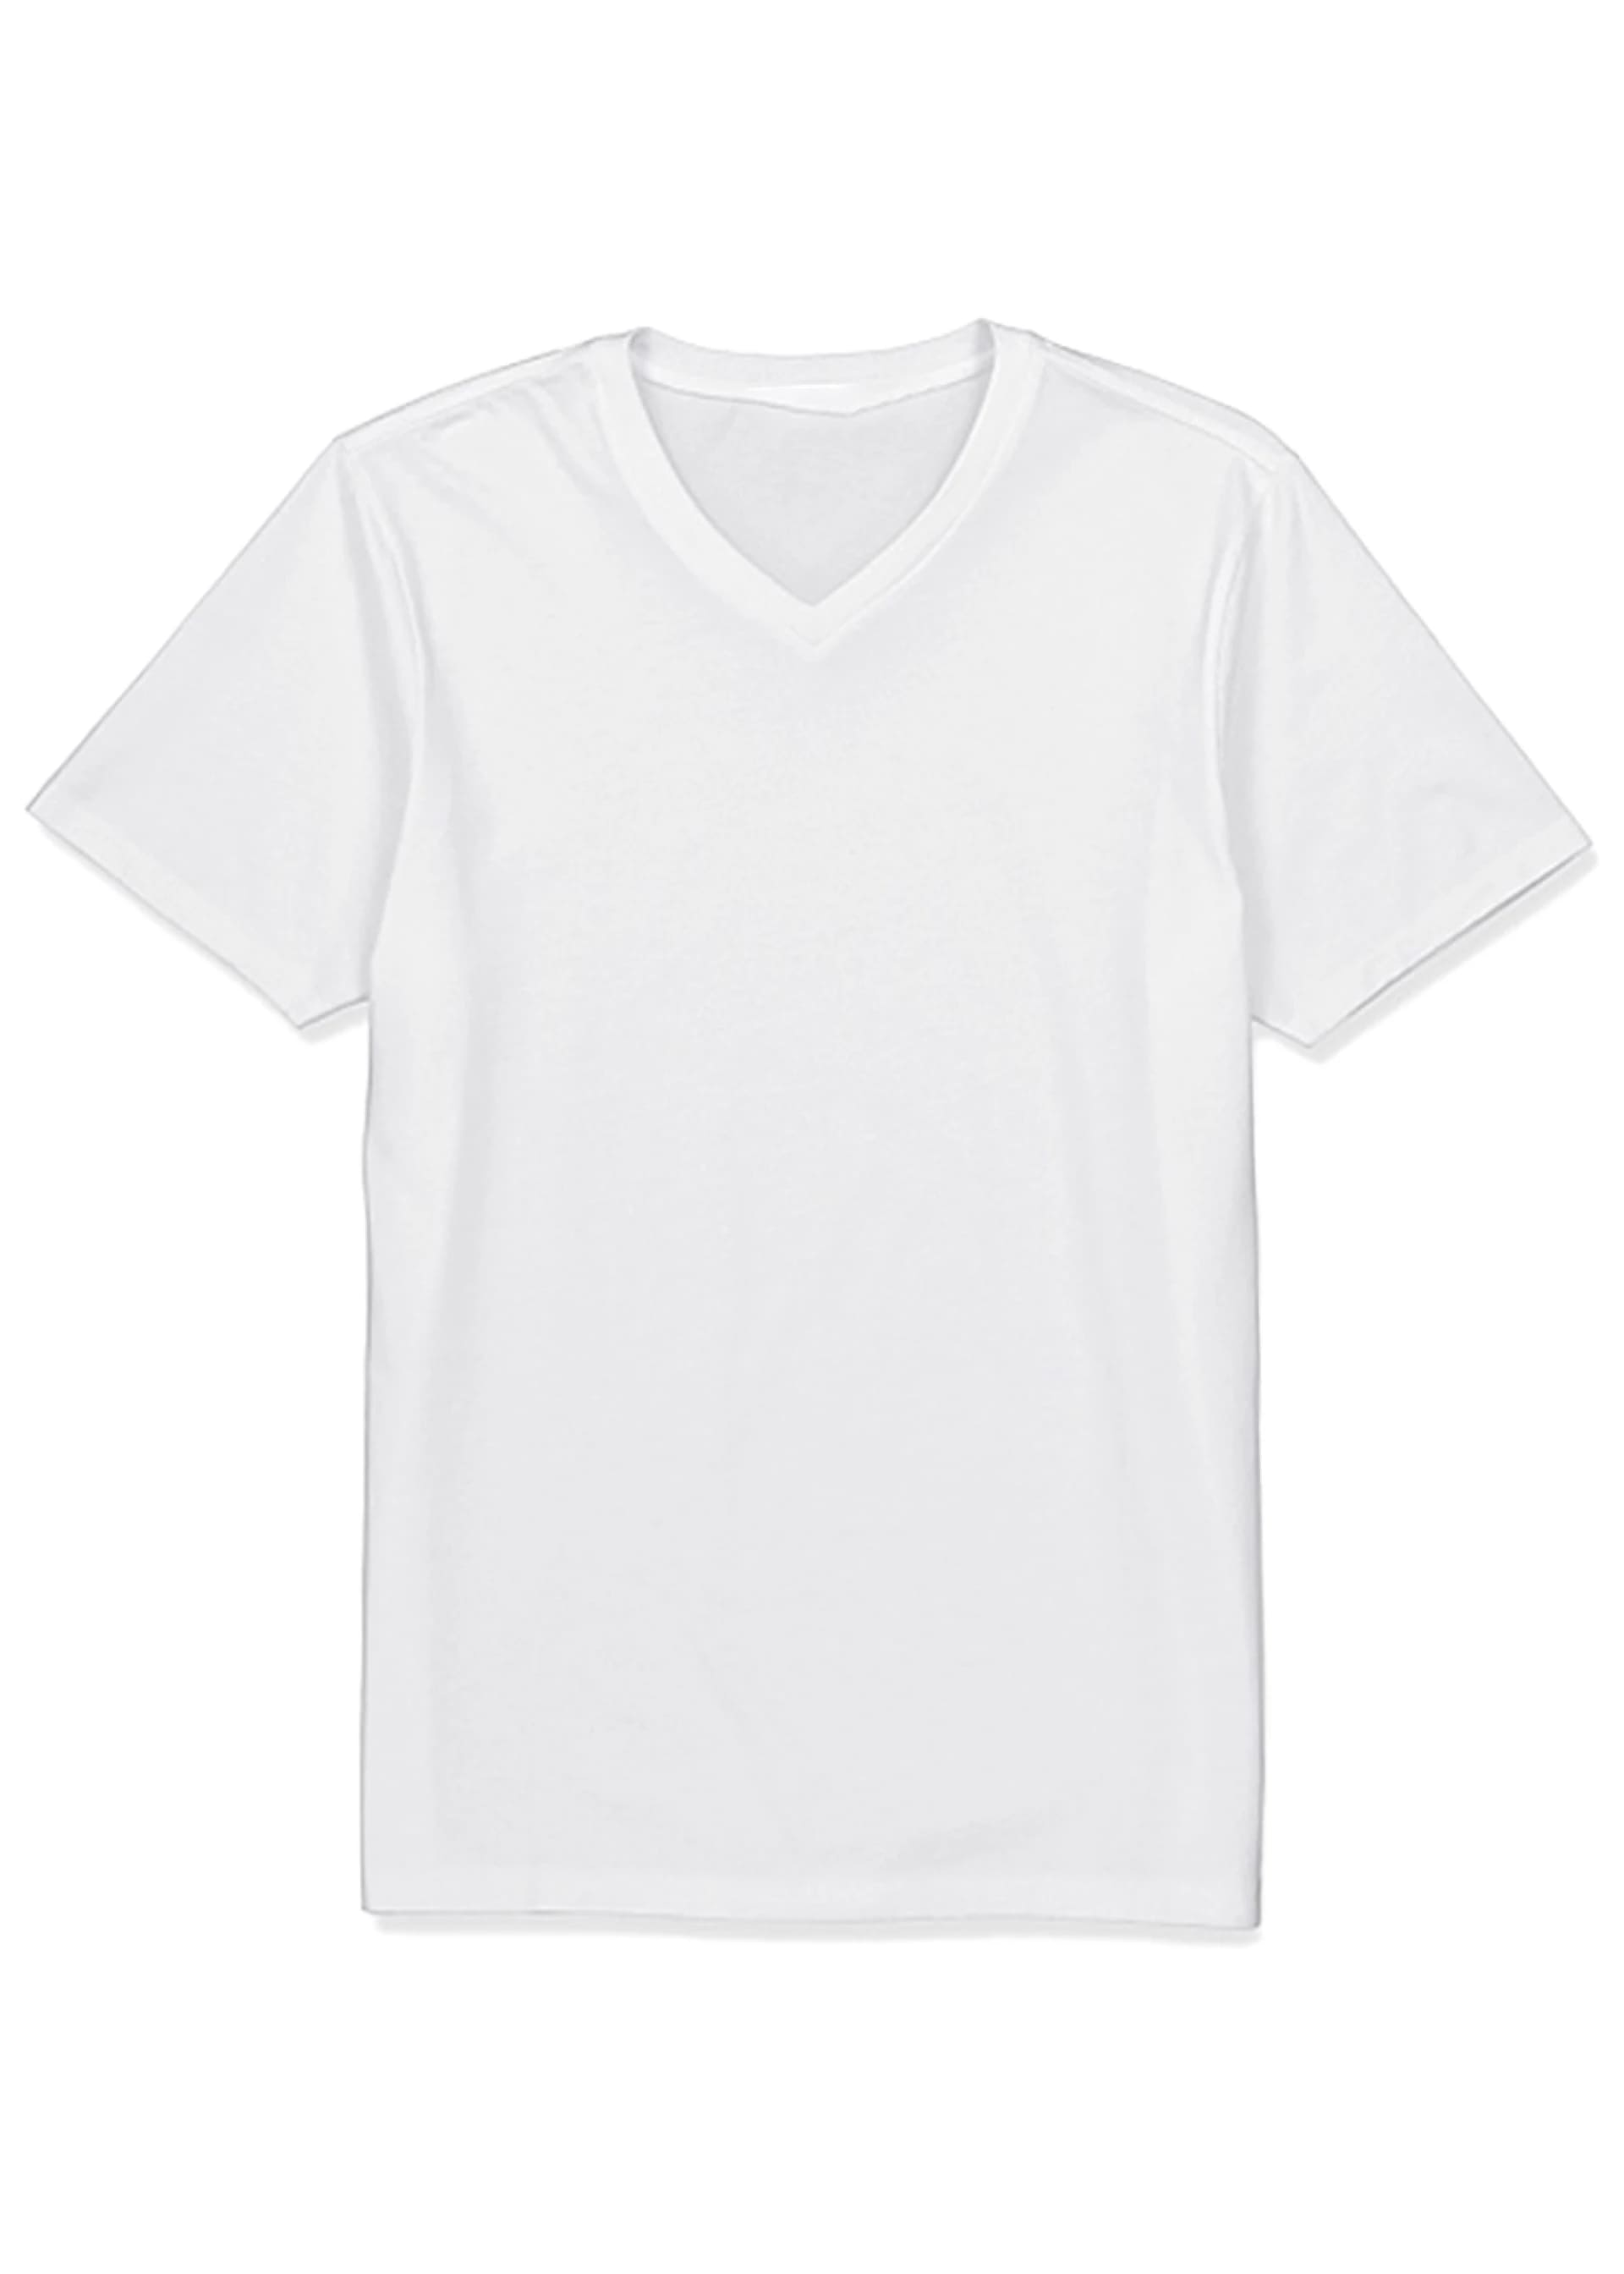 Stafford Essentials Cotton V-Neck T-Shirt For Men's[White], Model